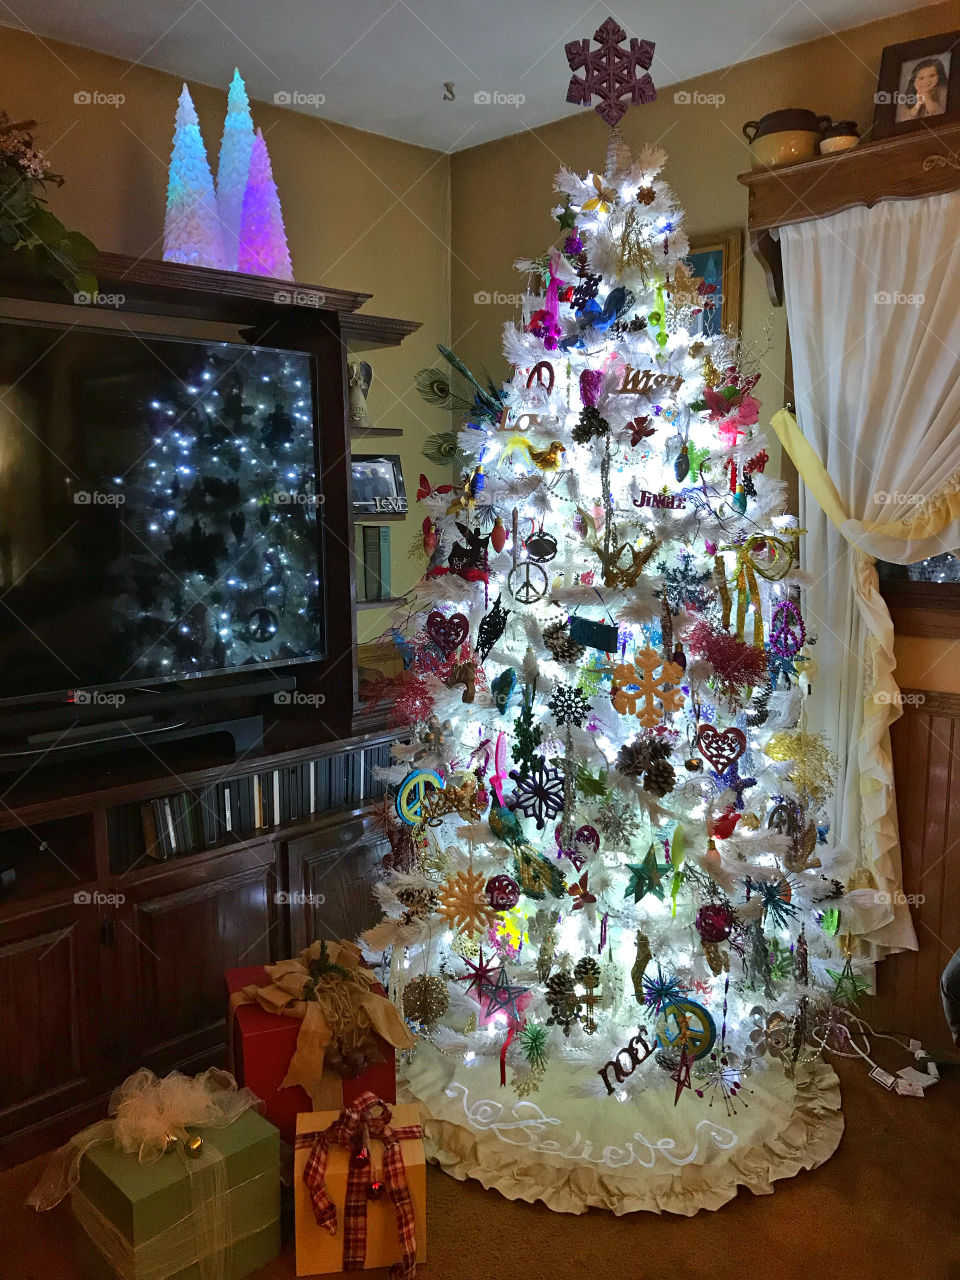 Setting up the Christmas tree 